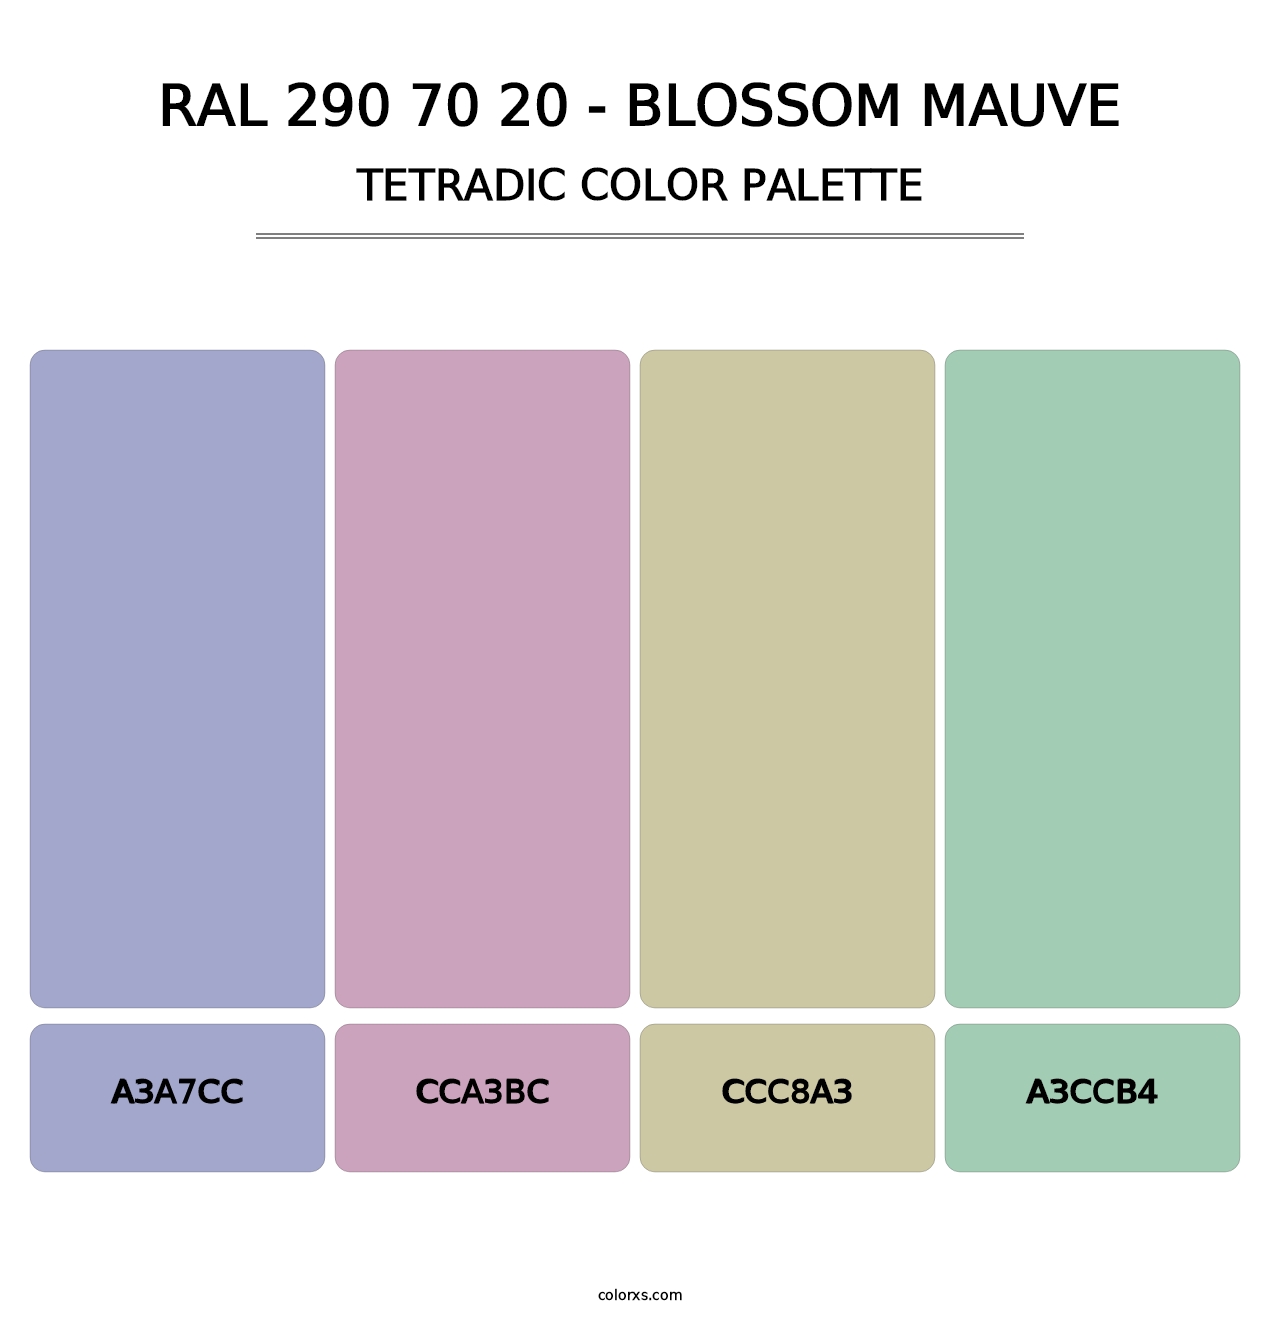 RAL 290 70 20 - Blossom Mauve - Tetradic Color Palette